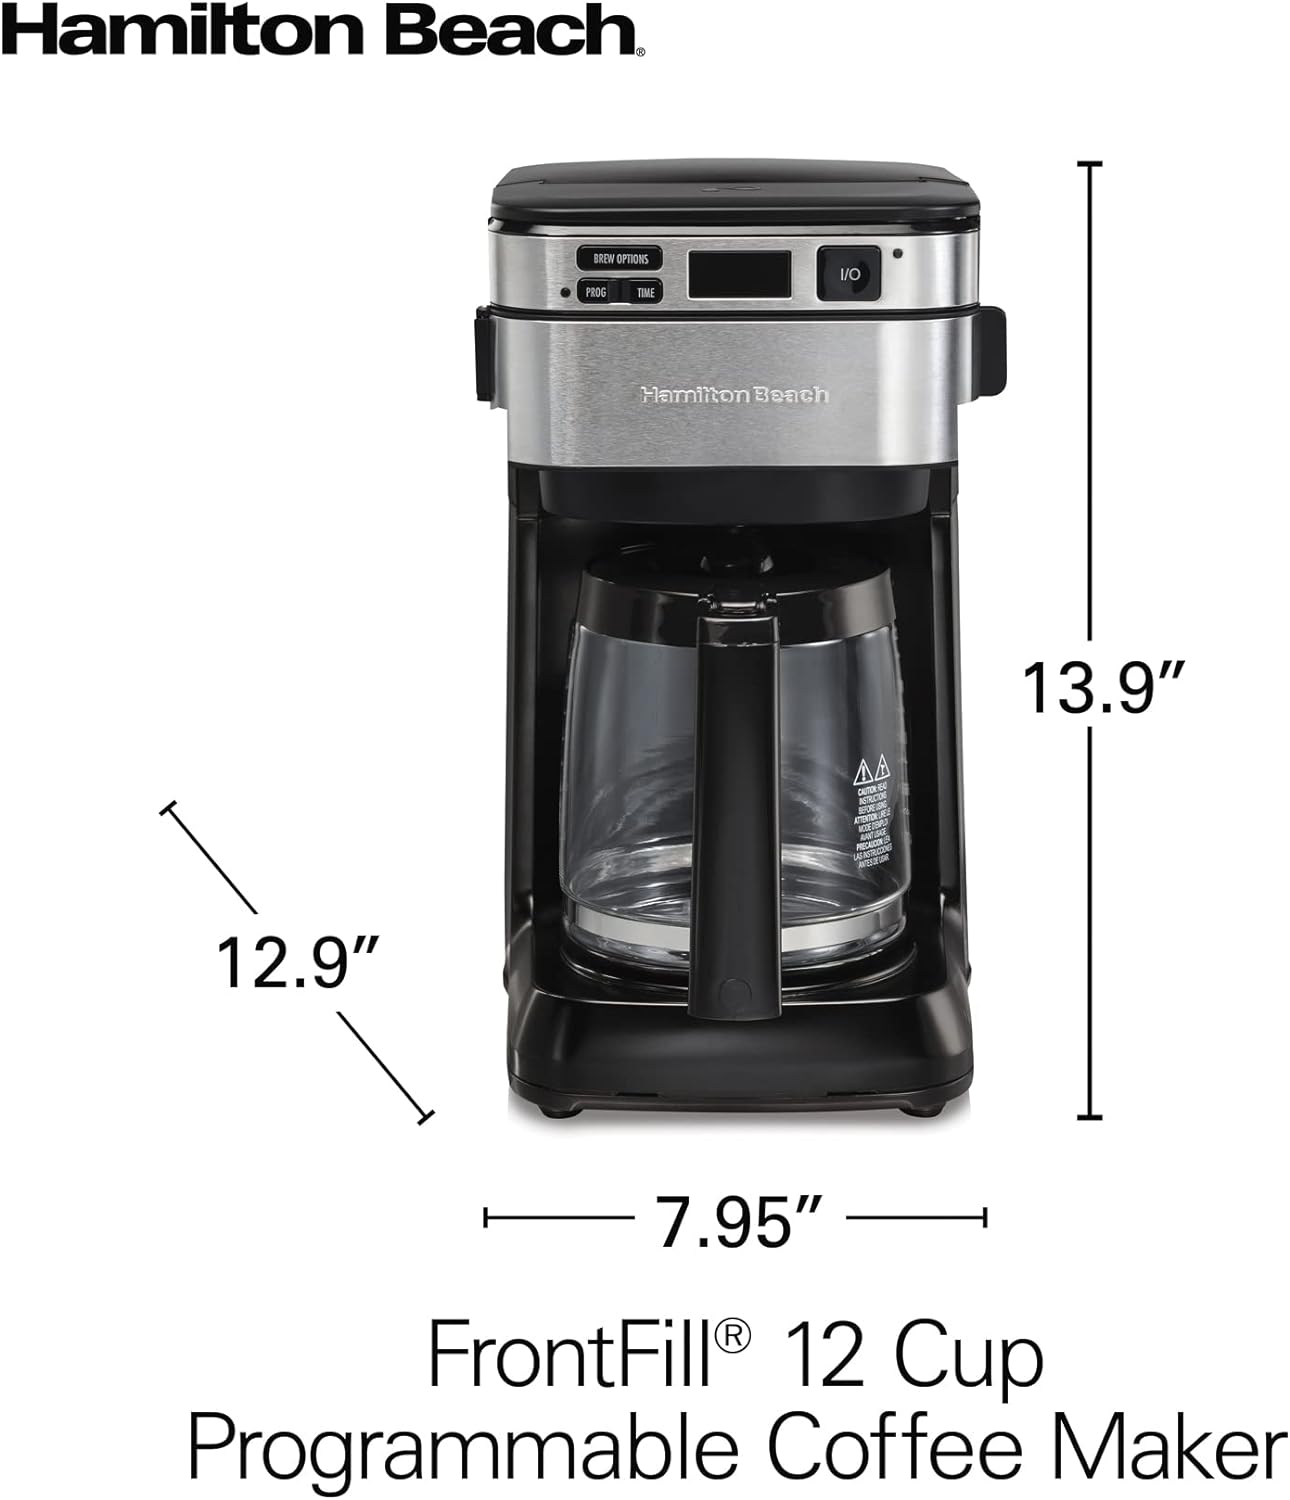 Hamilton Beach Frontfill 12 Cup Programmable Coffee Maker - Black